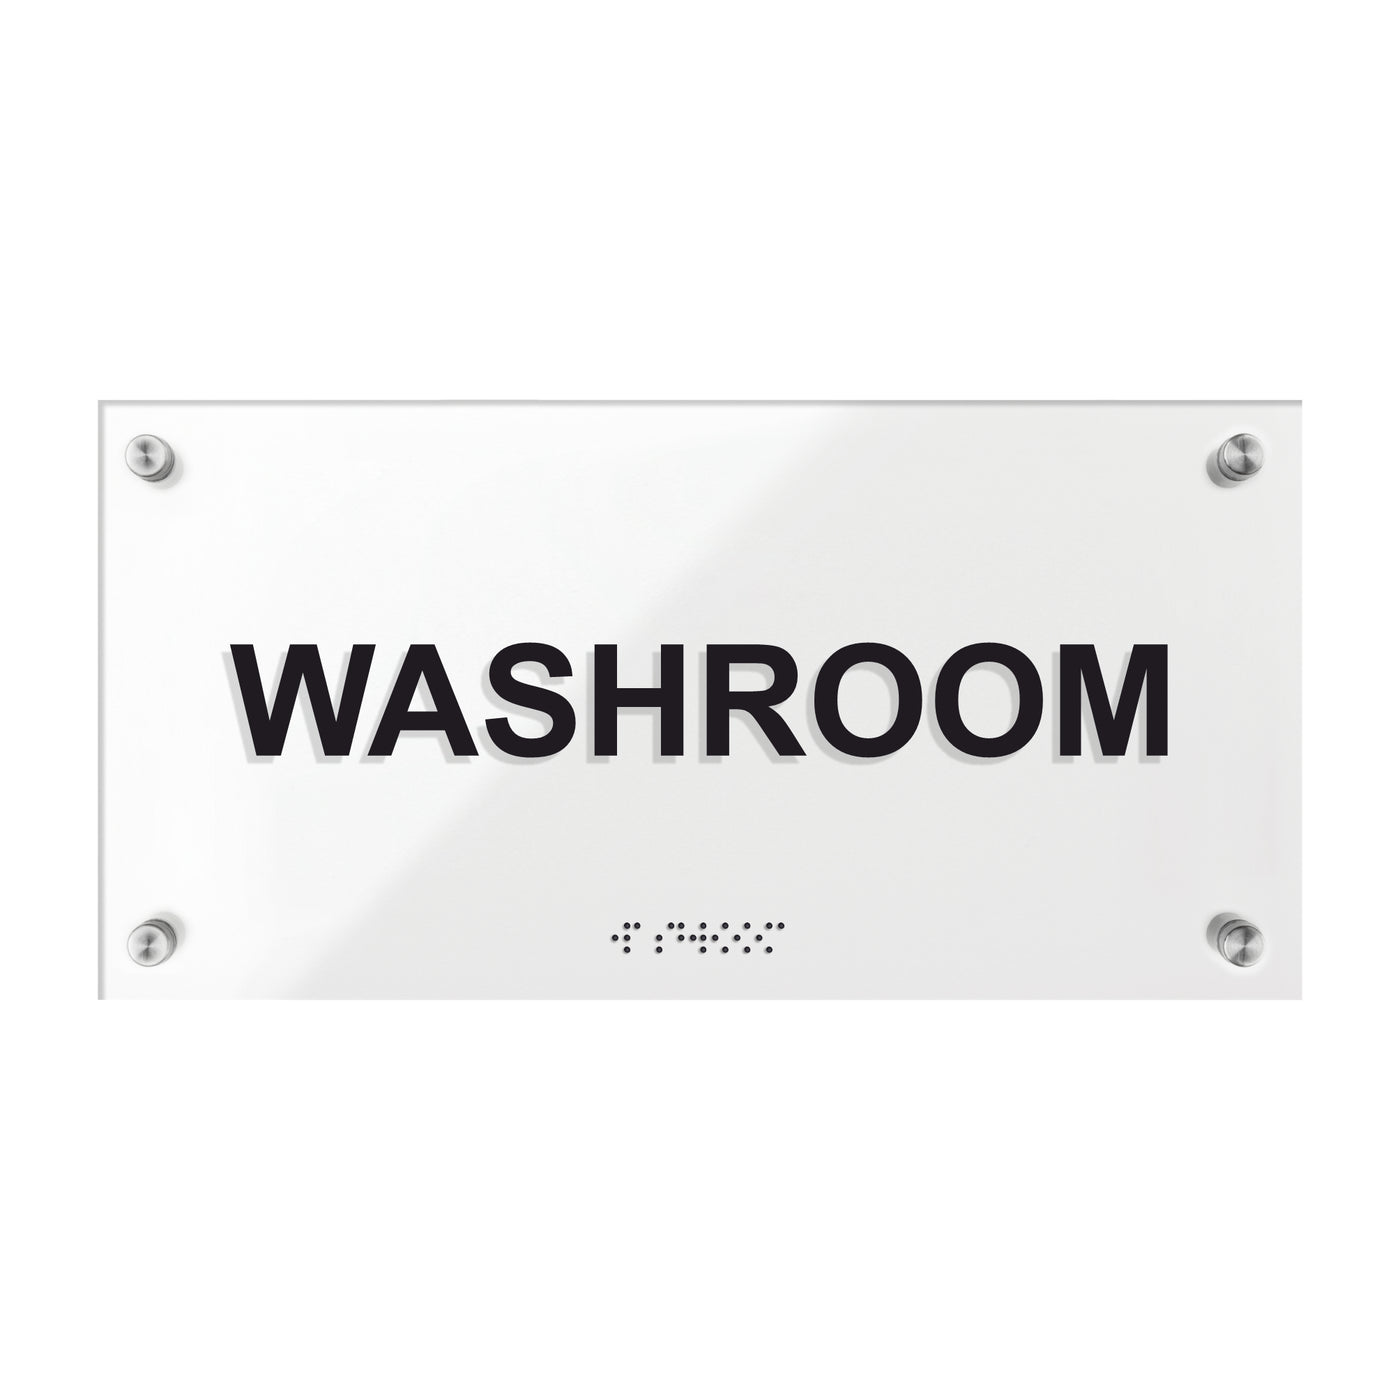 Washroom Signs - Acrylic Door Plate "Classic" Design